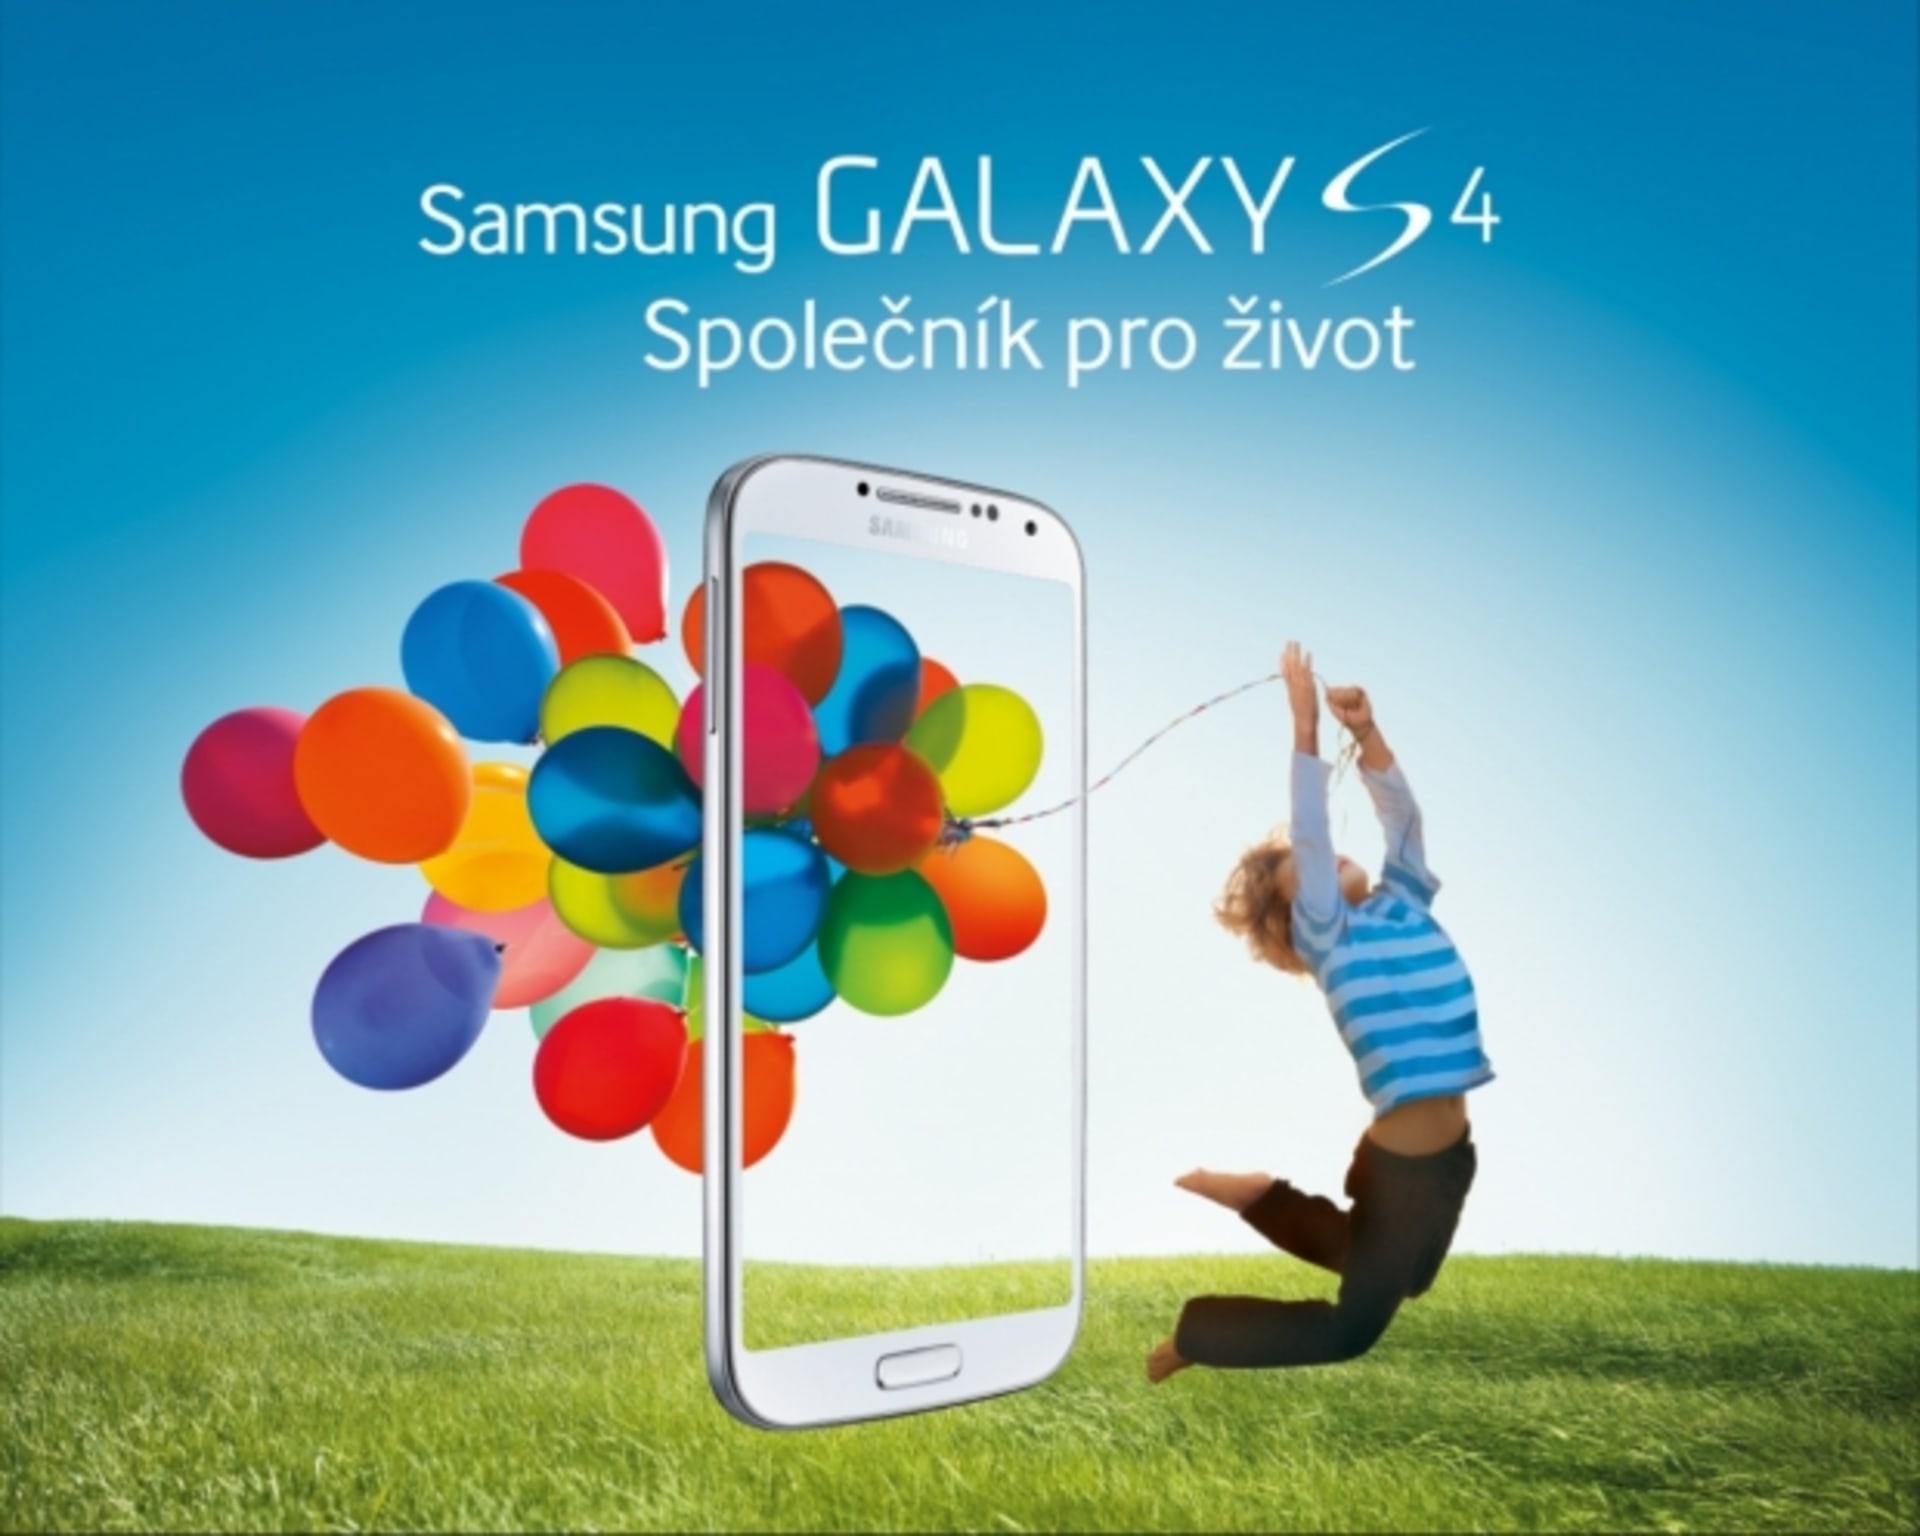 Balonková mánie pokračuje: Samsung spouští soutěž o nové smartphony GALAXY S4!